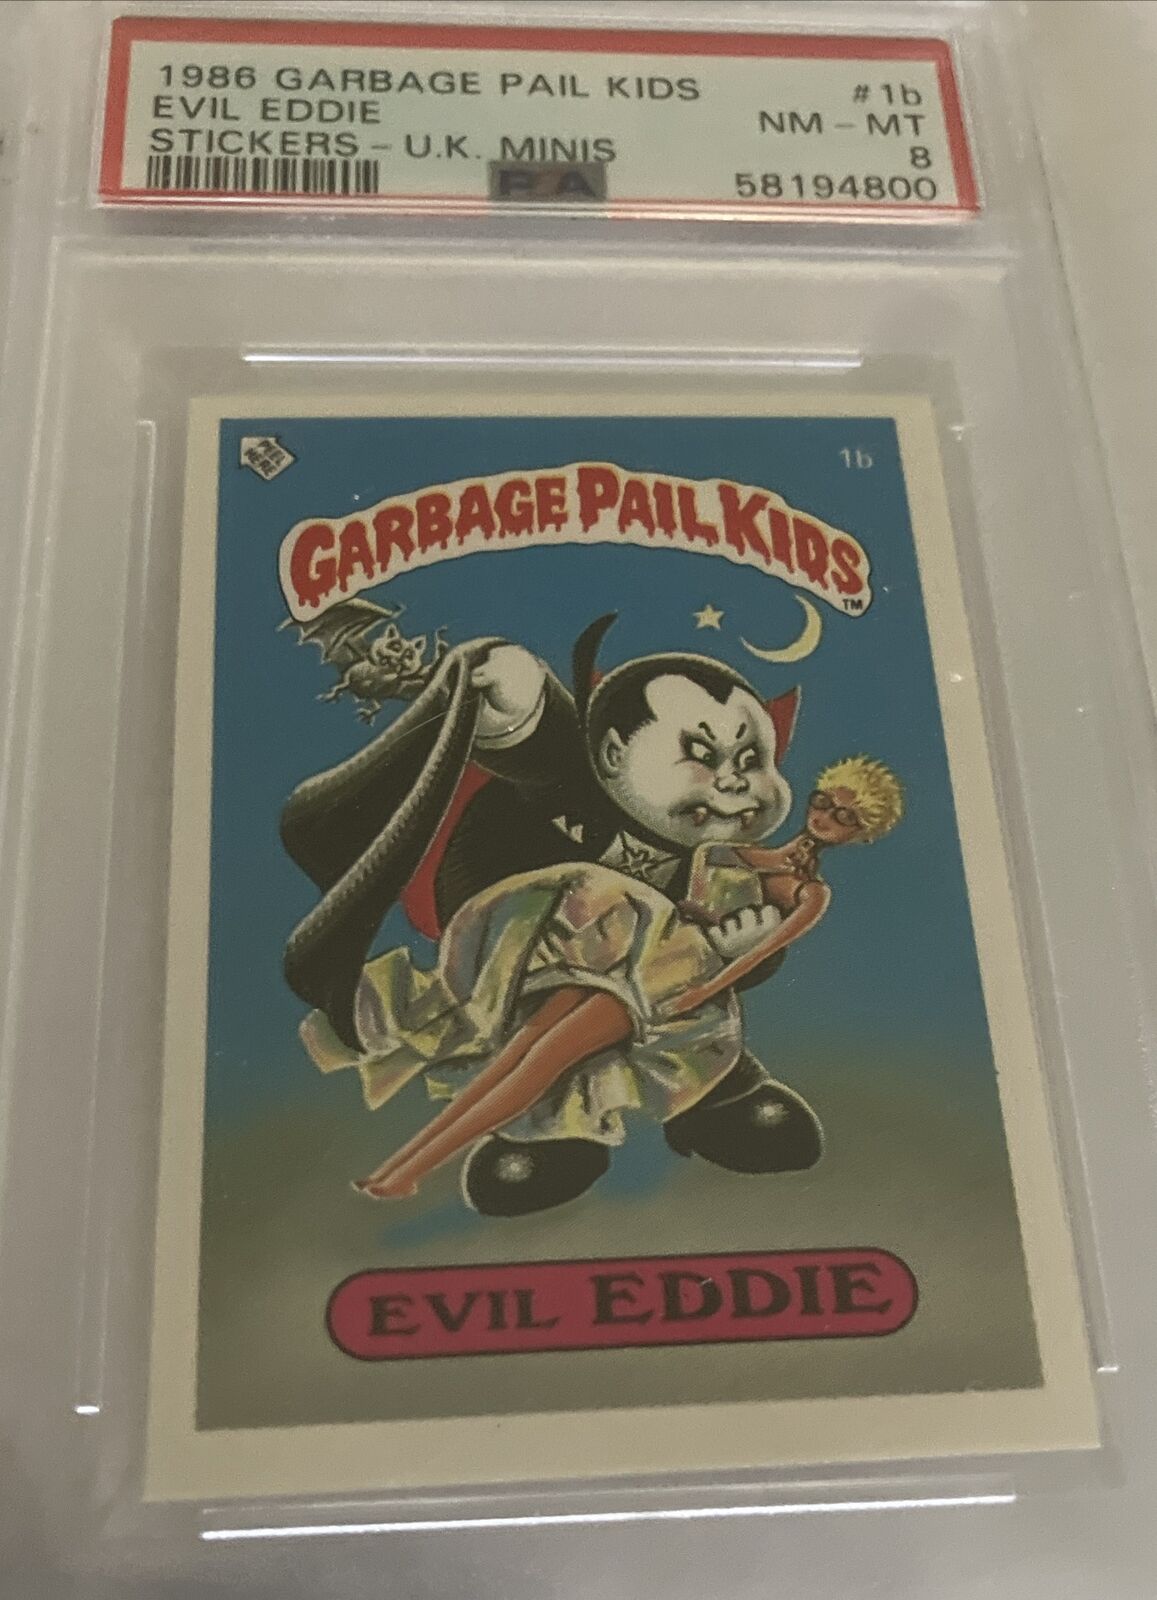 1986 Topps U.K. Garbage Pail Kids #1a Evil Eddie UK gpk minis PSA 8 Graded Card